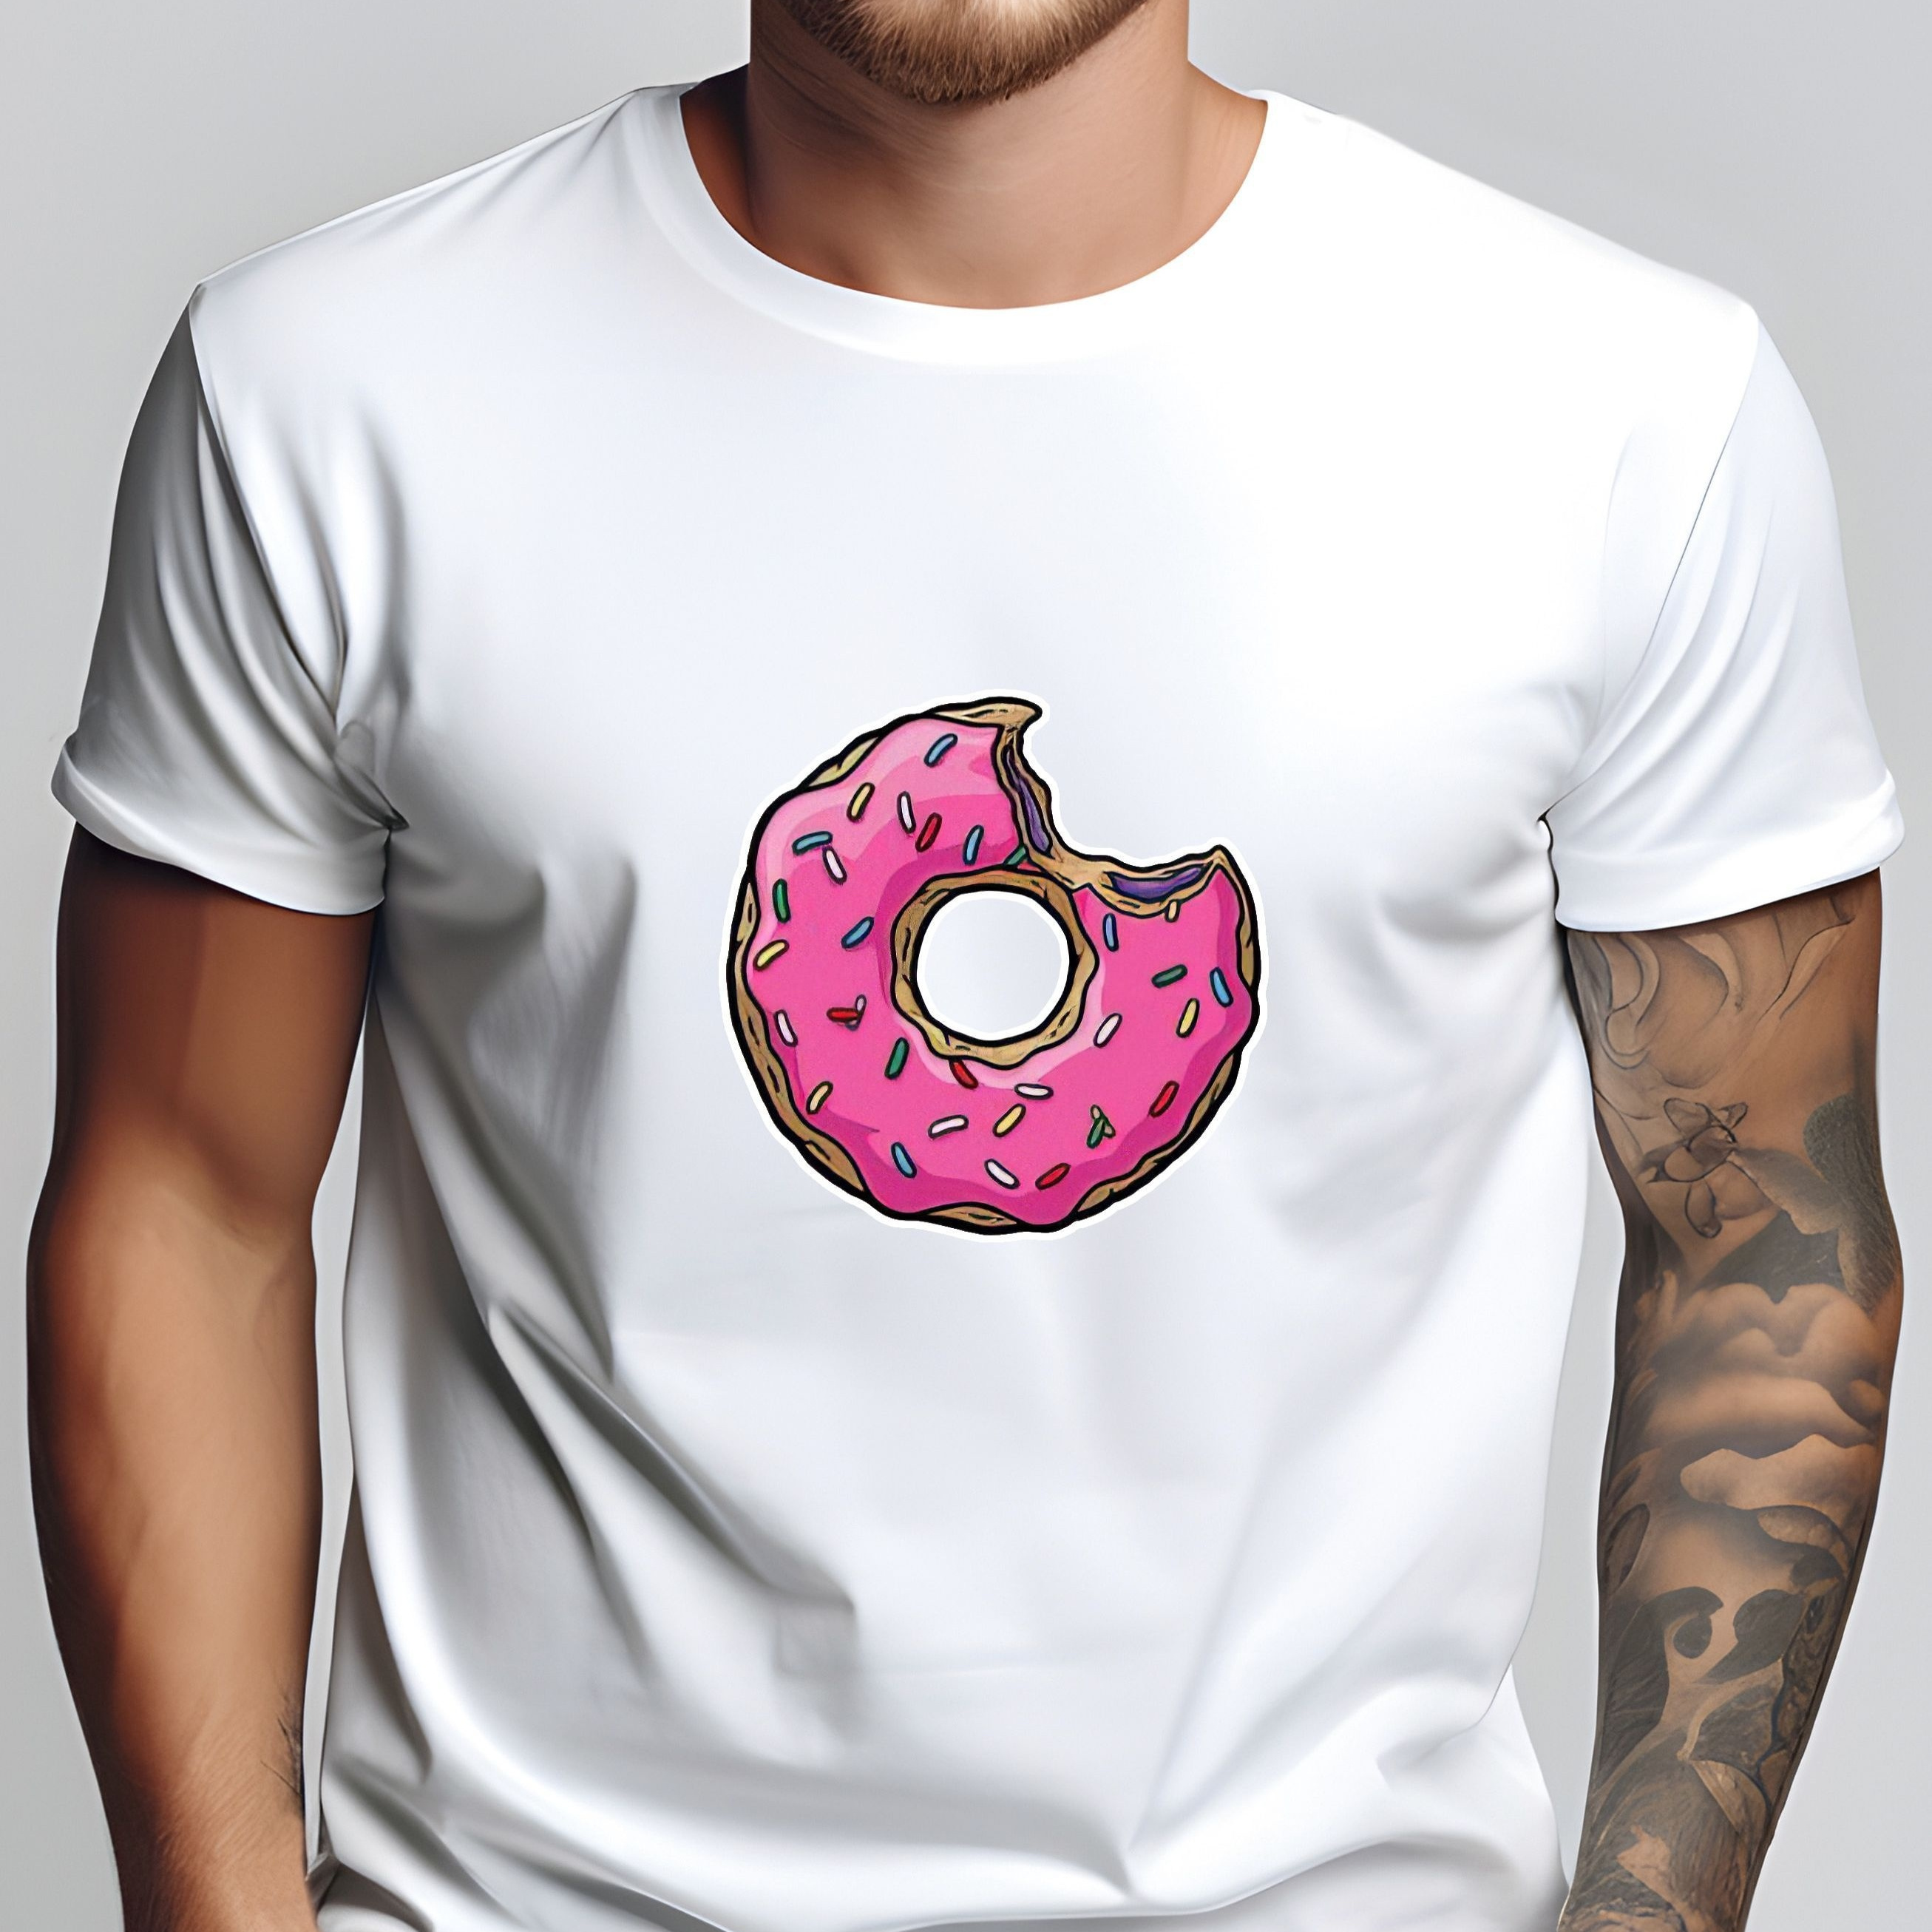 

Doughnut Print Tee Shirt, Tees For Men, Casual Short Sleeve T-shirt For Summer